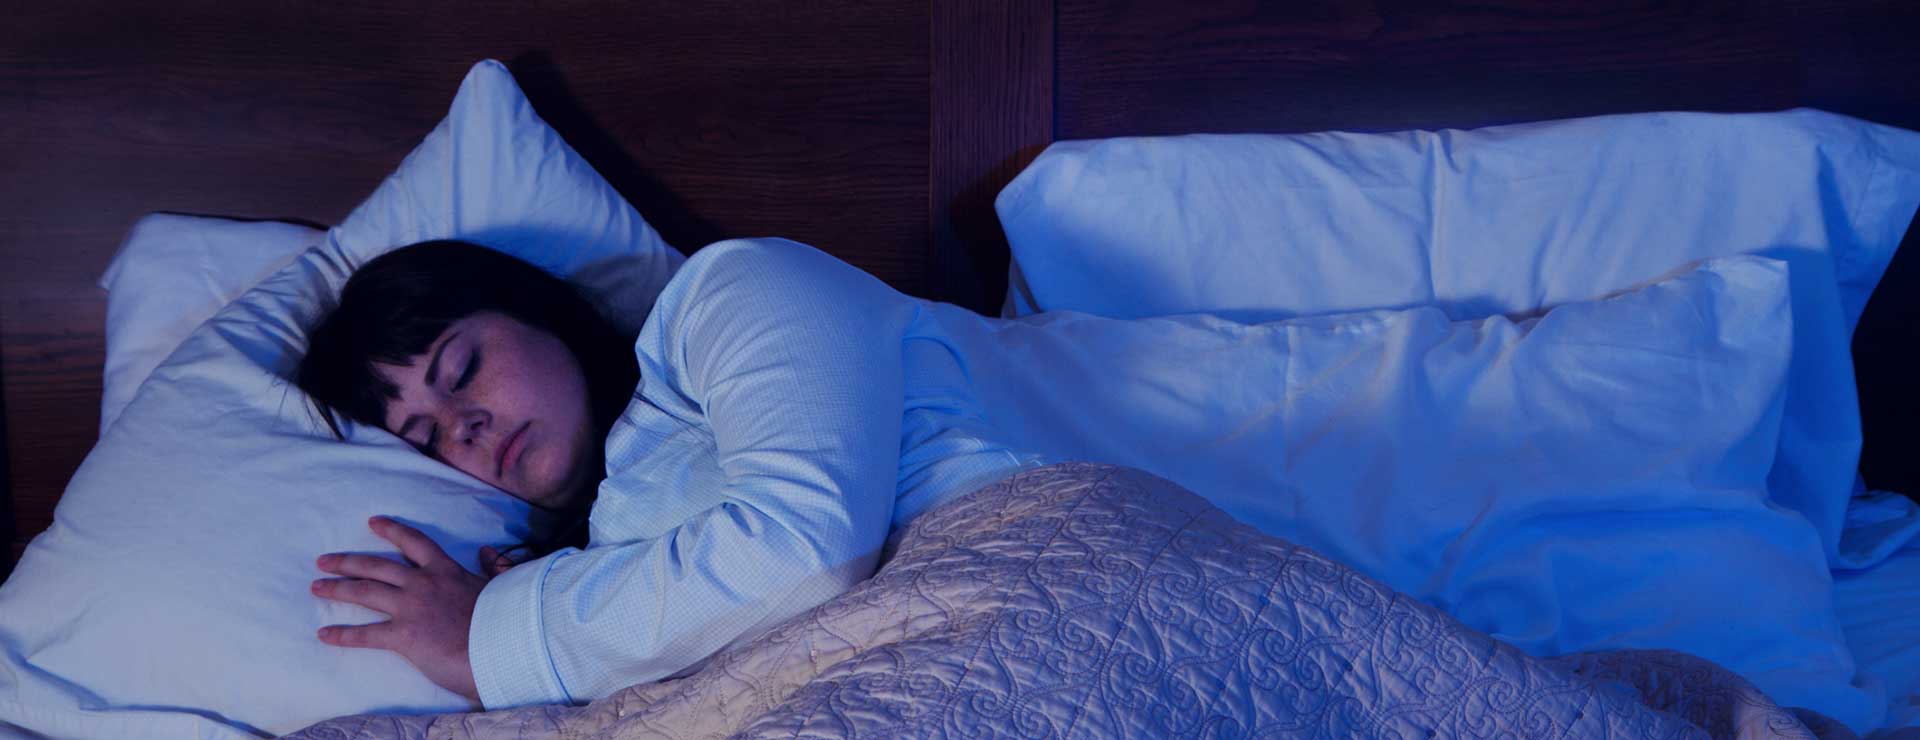 Natural Sleep Aids: Home Remedies to Help You Sleep | Johns Hopkins Medicine